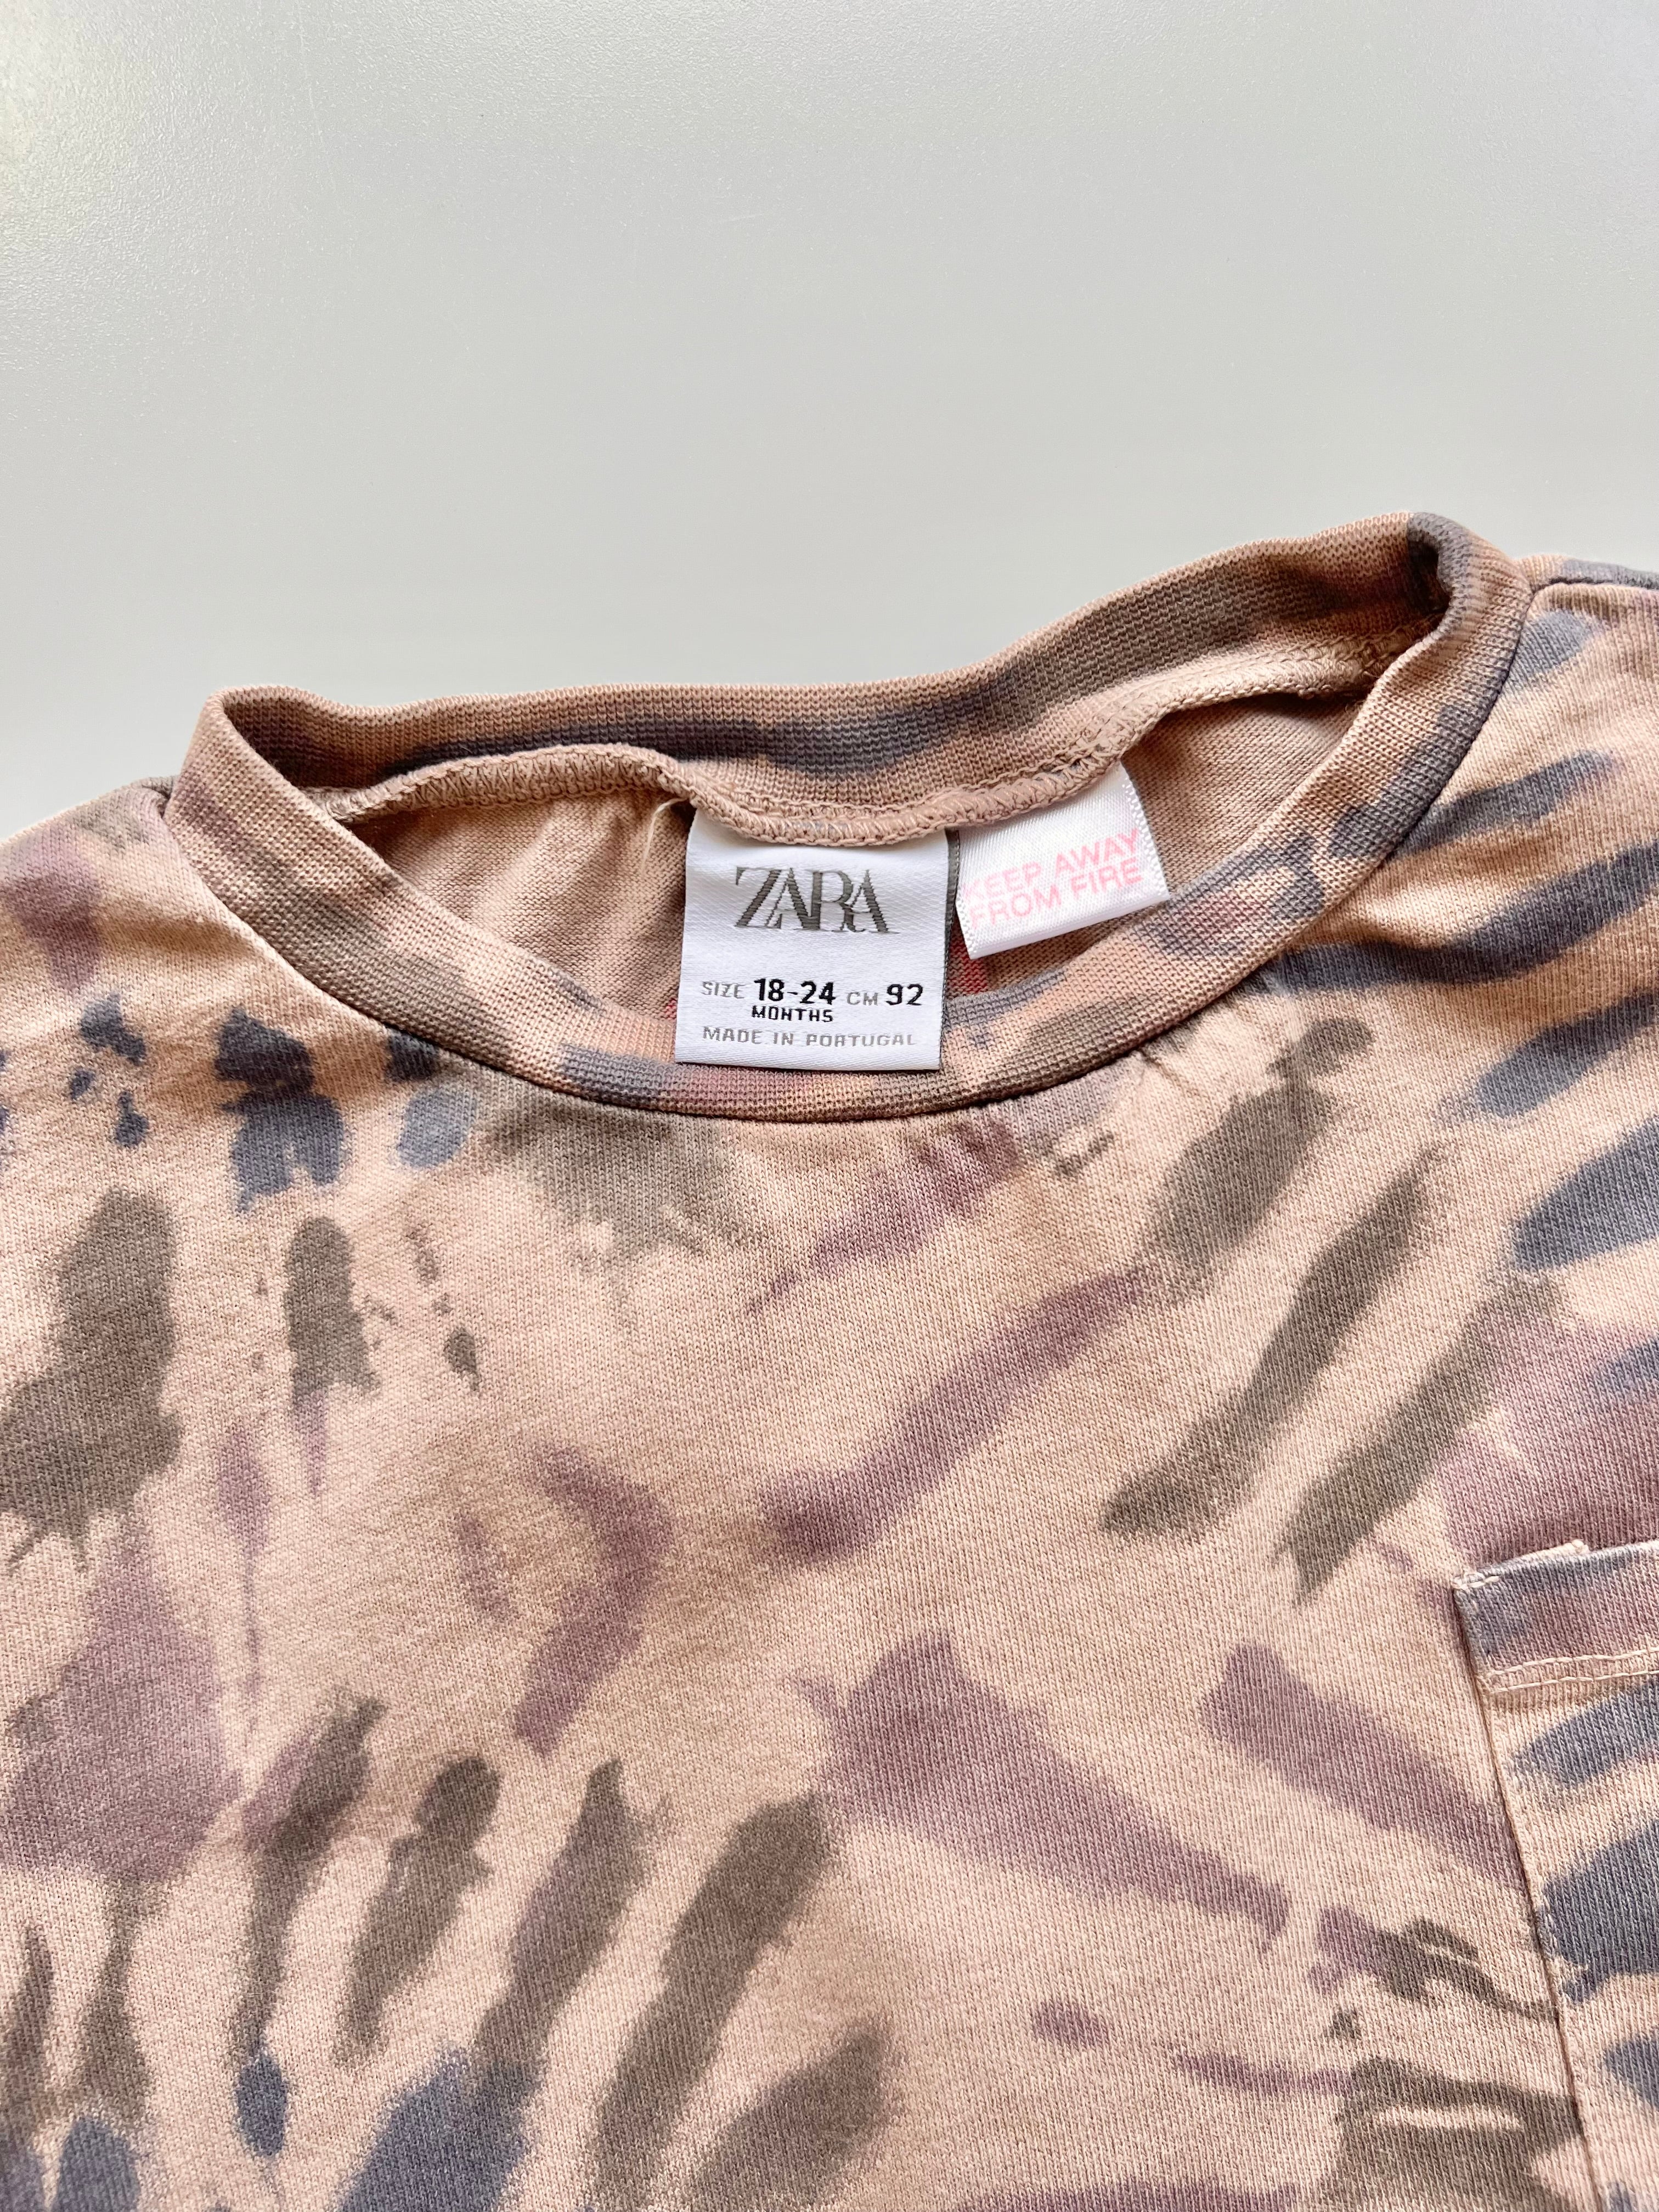 Zara Blur Capsule Tie Dye T-Shirt 18-24 Months